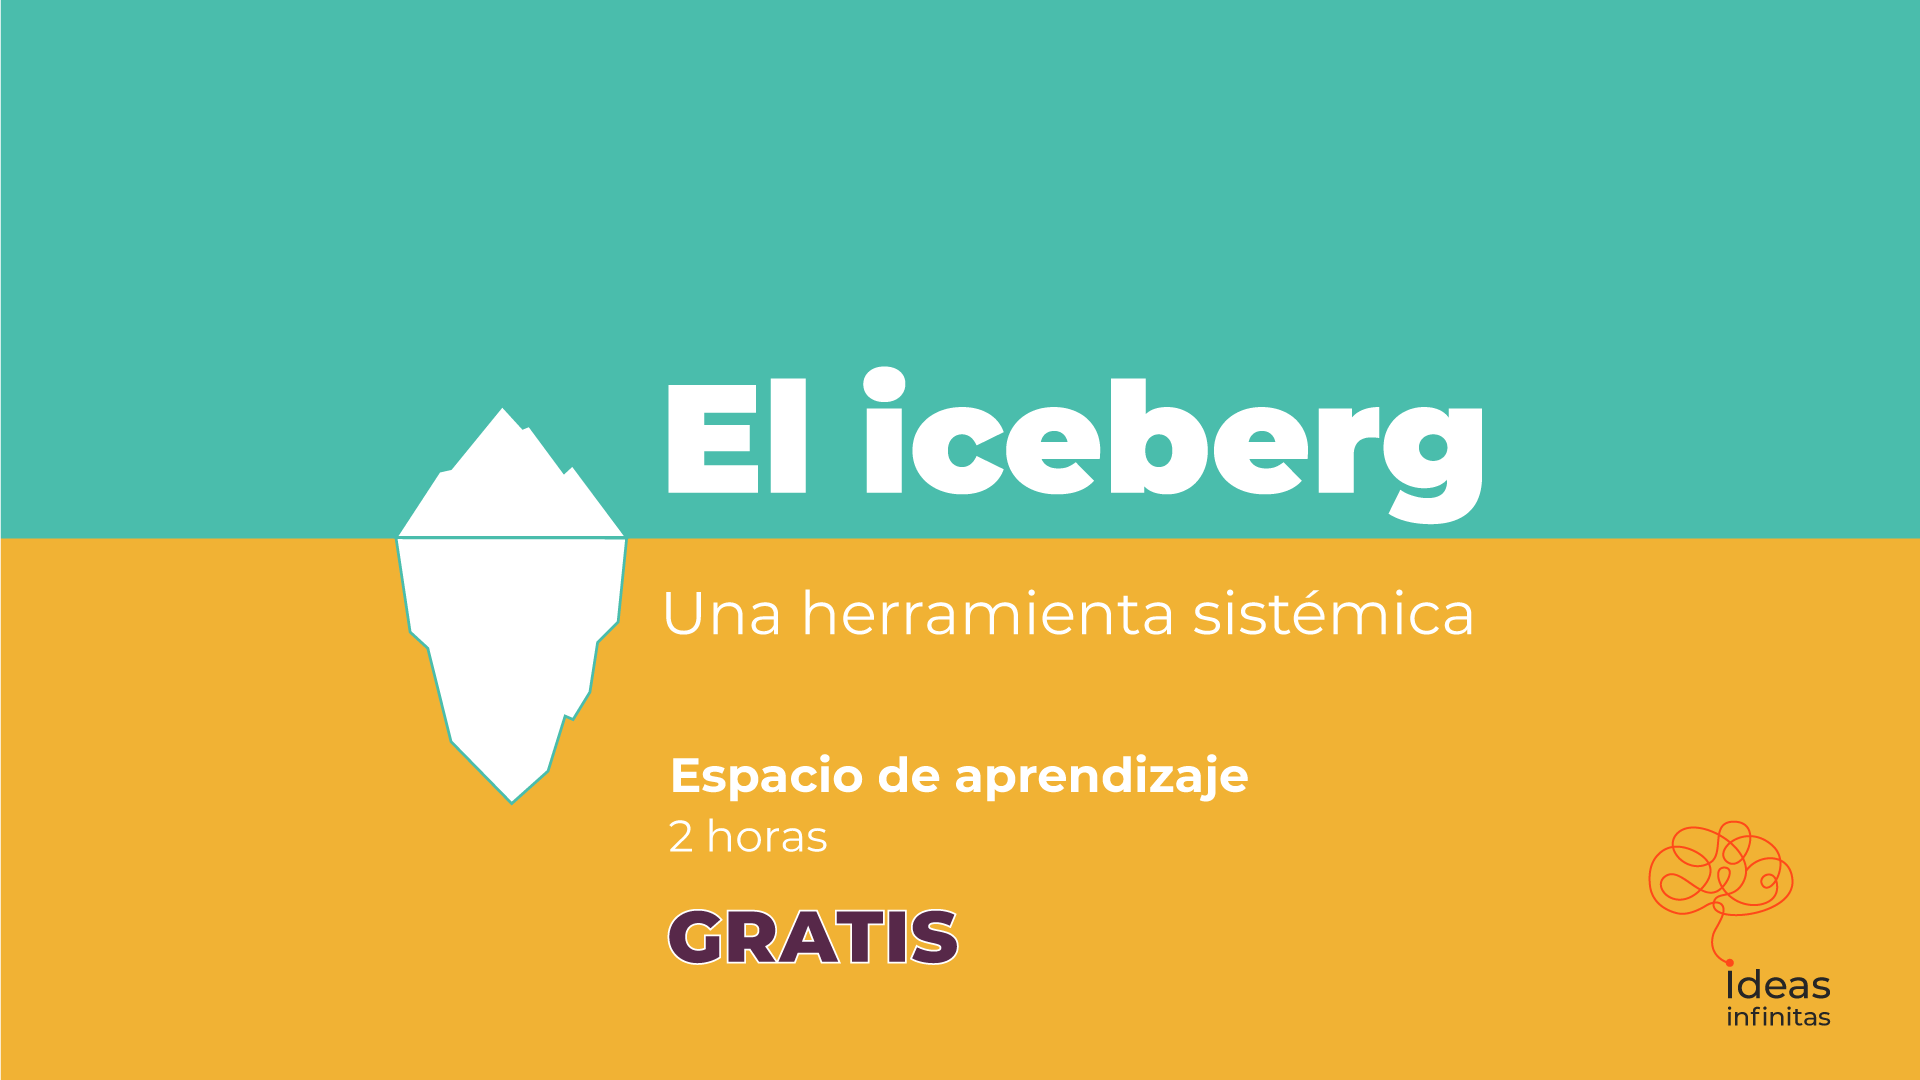 El iceberg. Una herramienta sistémica